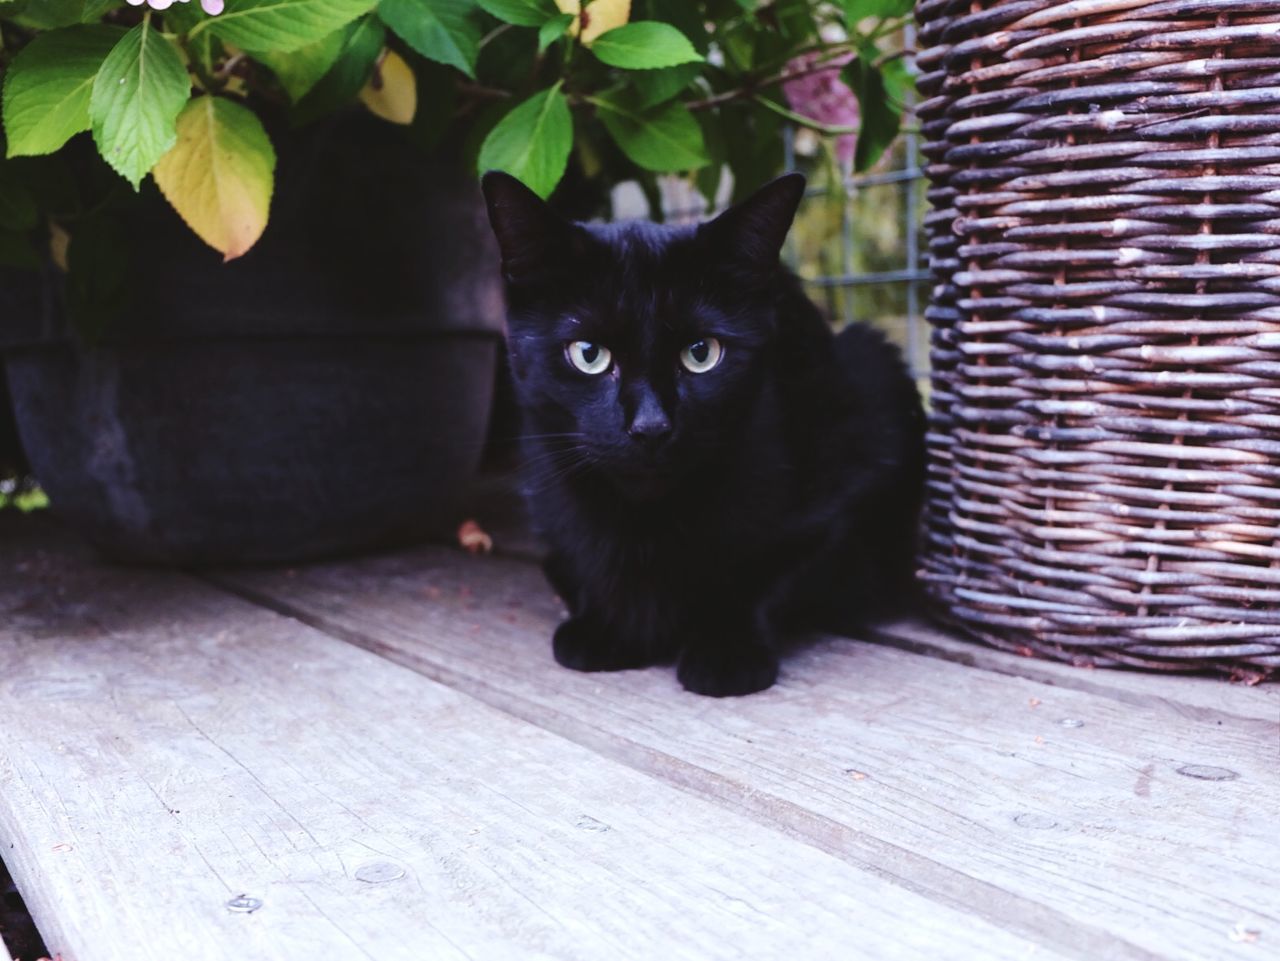 Black cat sitting near house plant